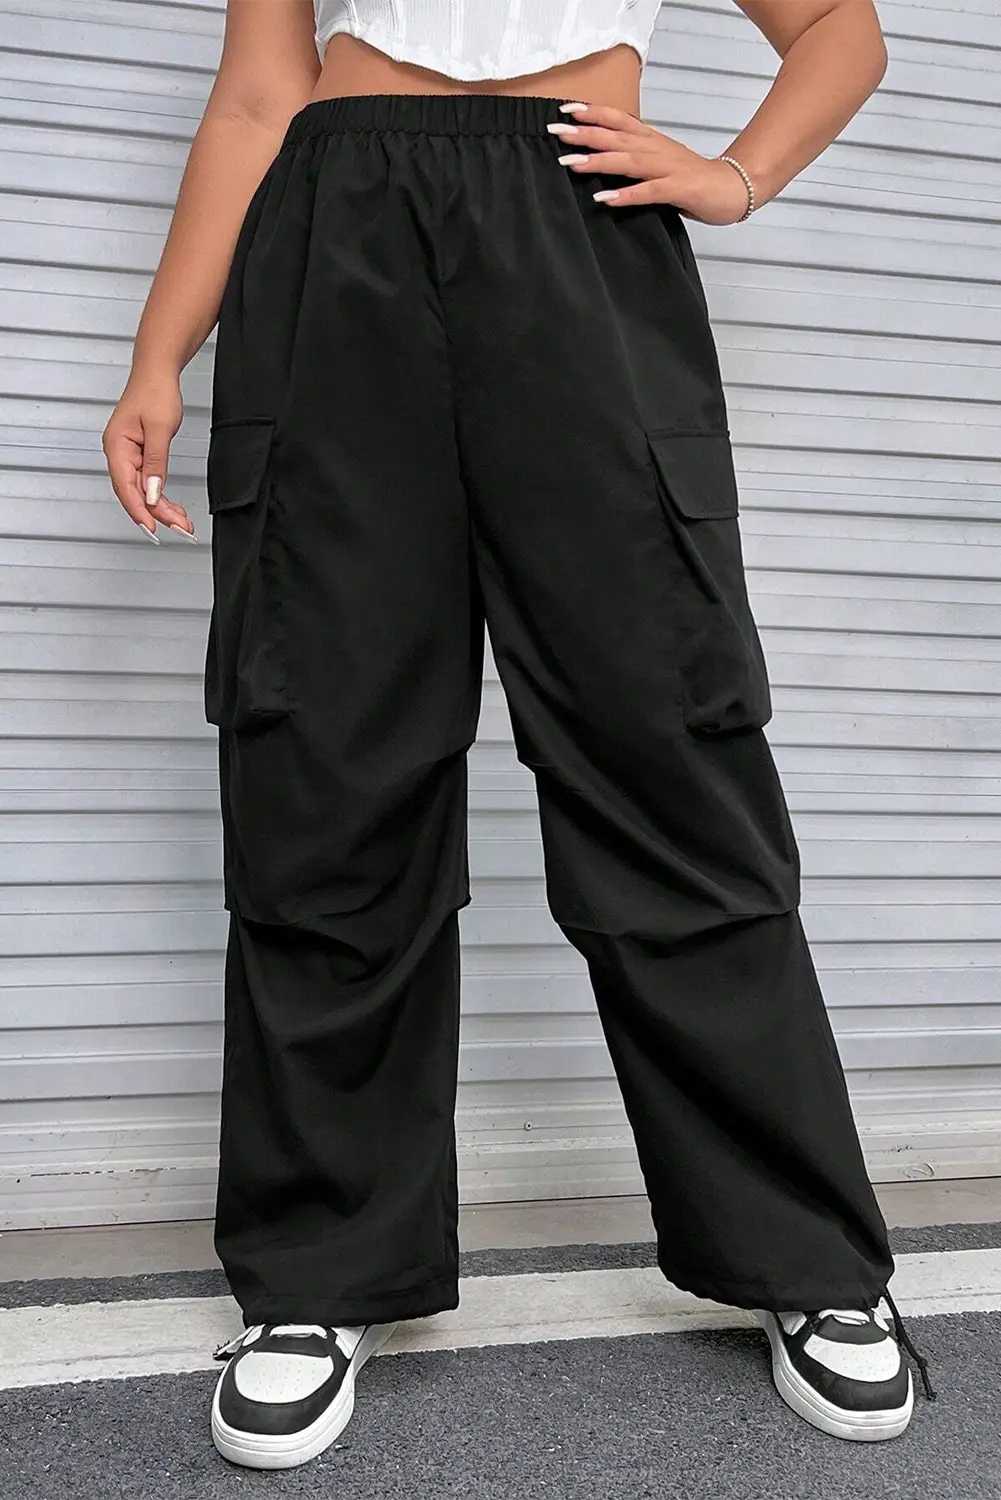 Black plus size flap pocket elastic waist cargo pants - 1x / 90% polyamide + 10% elastane